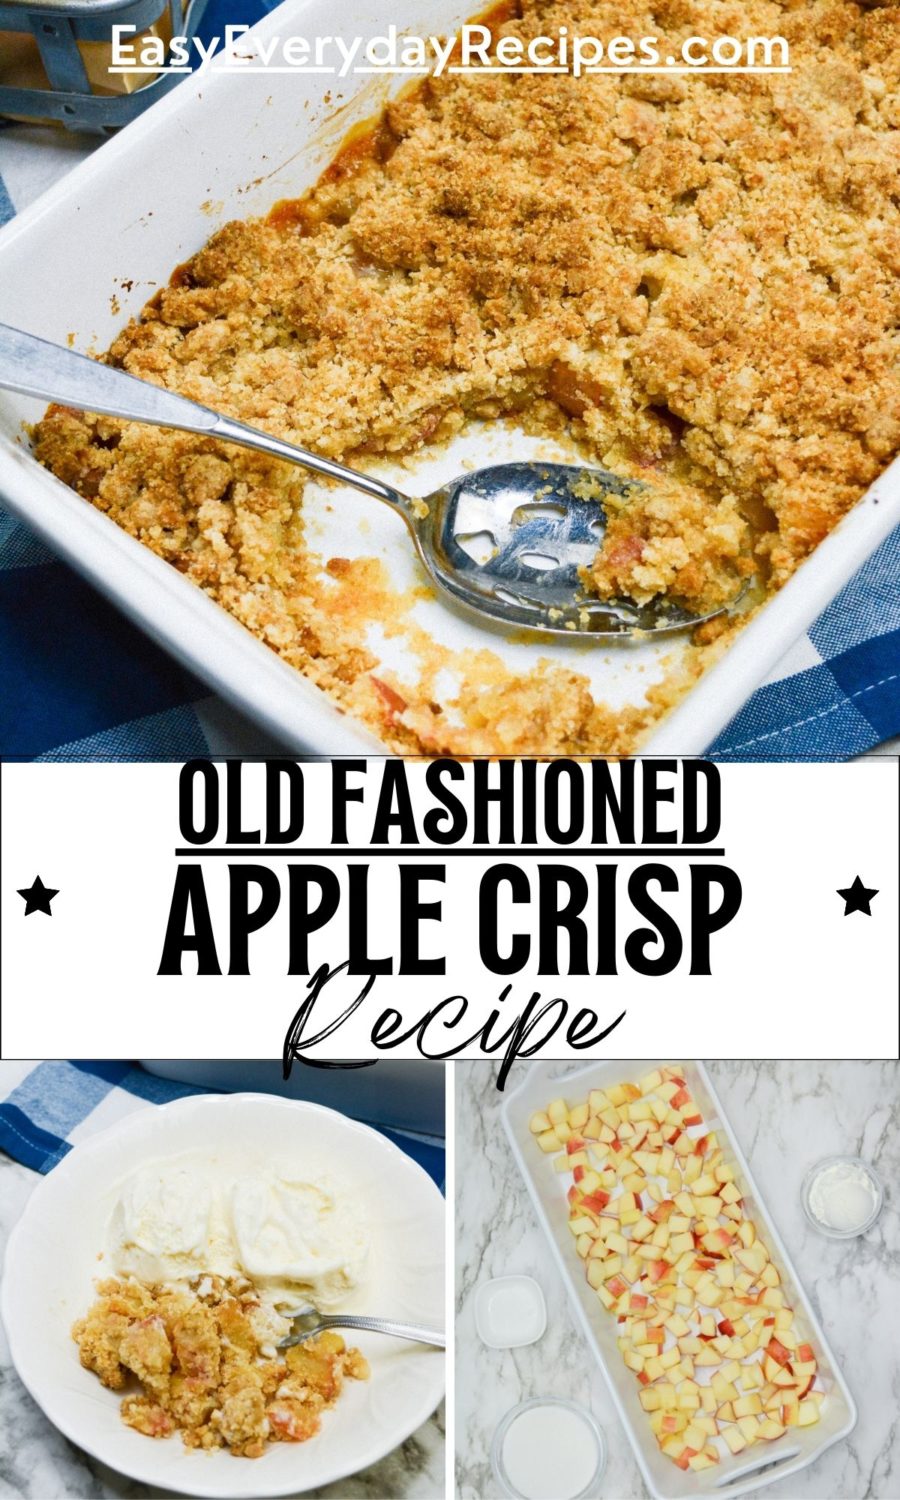 Old fashioned apple crisp recipe.